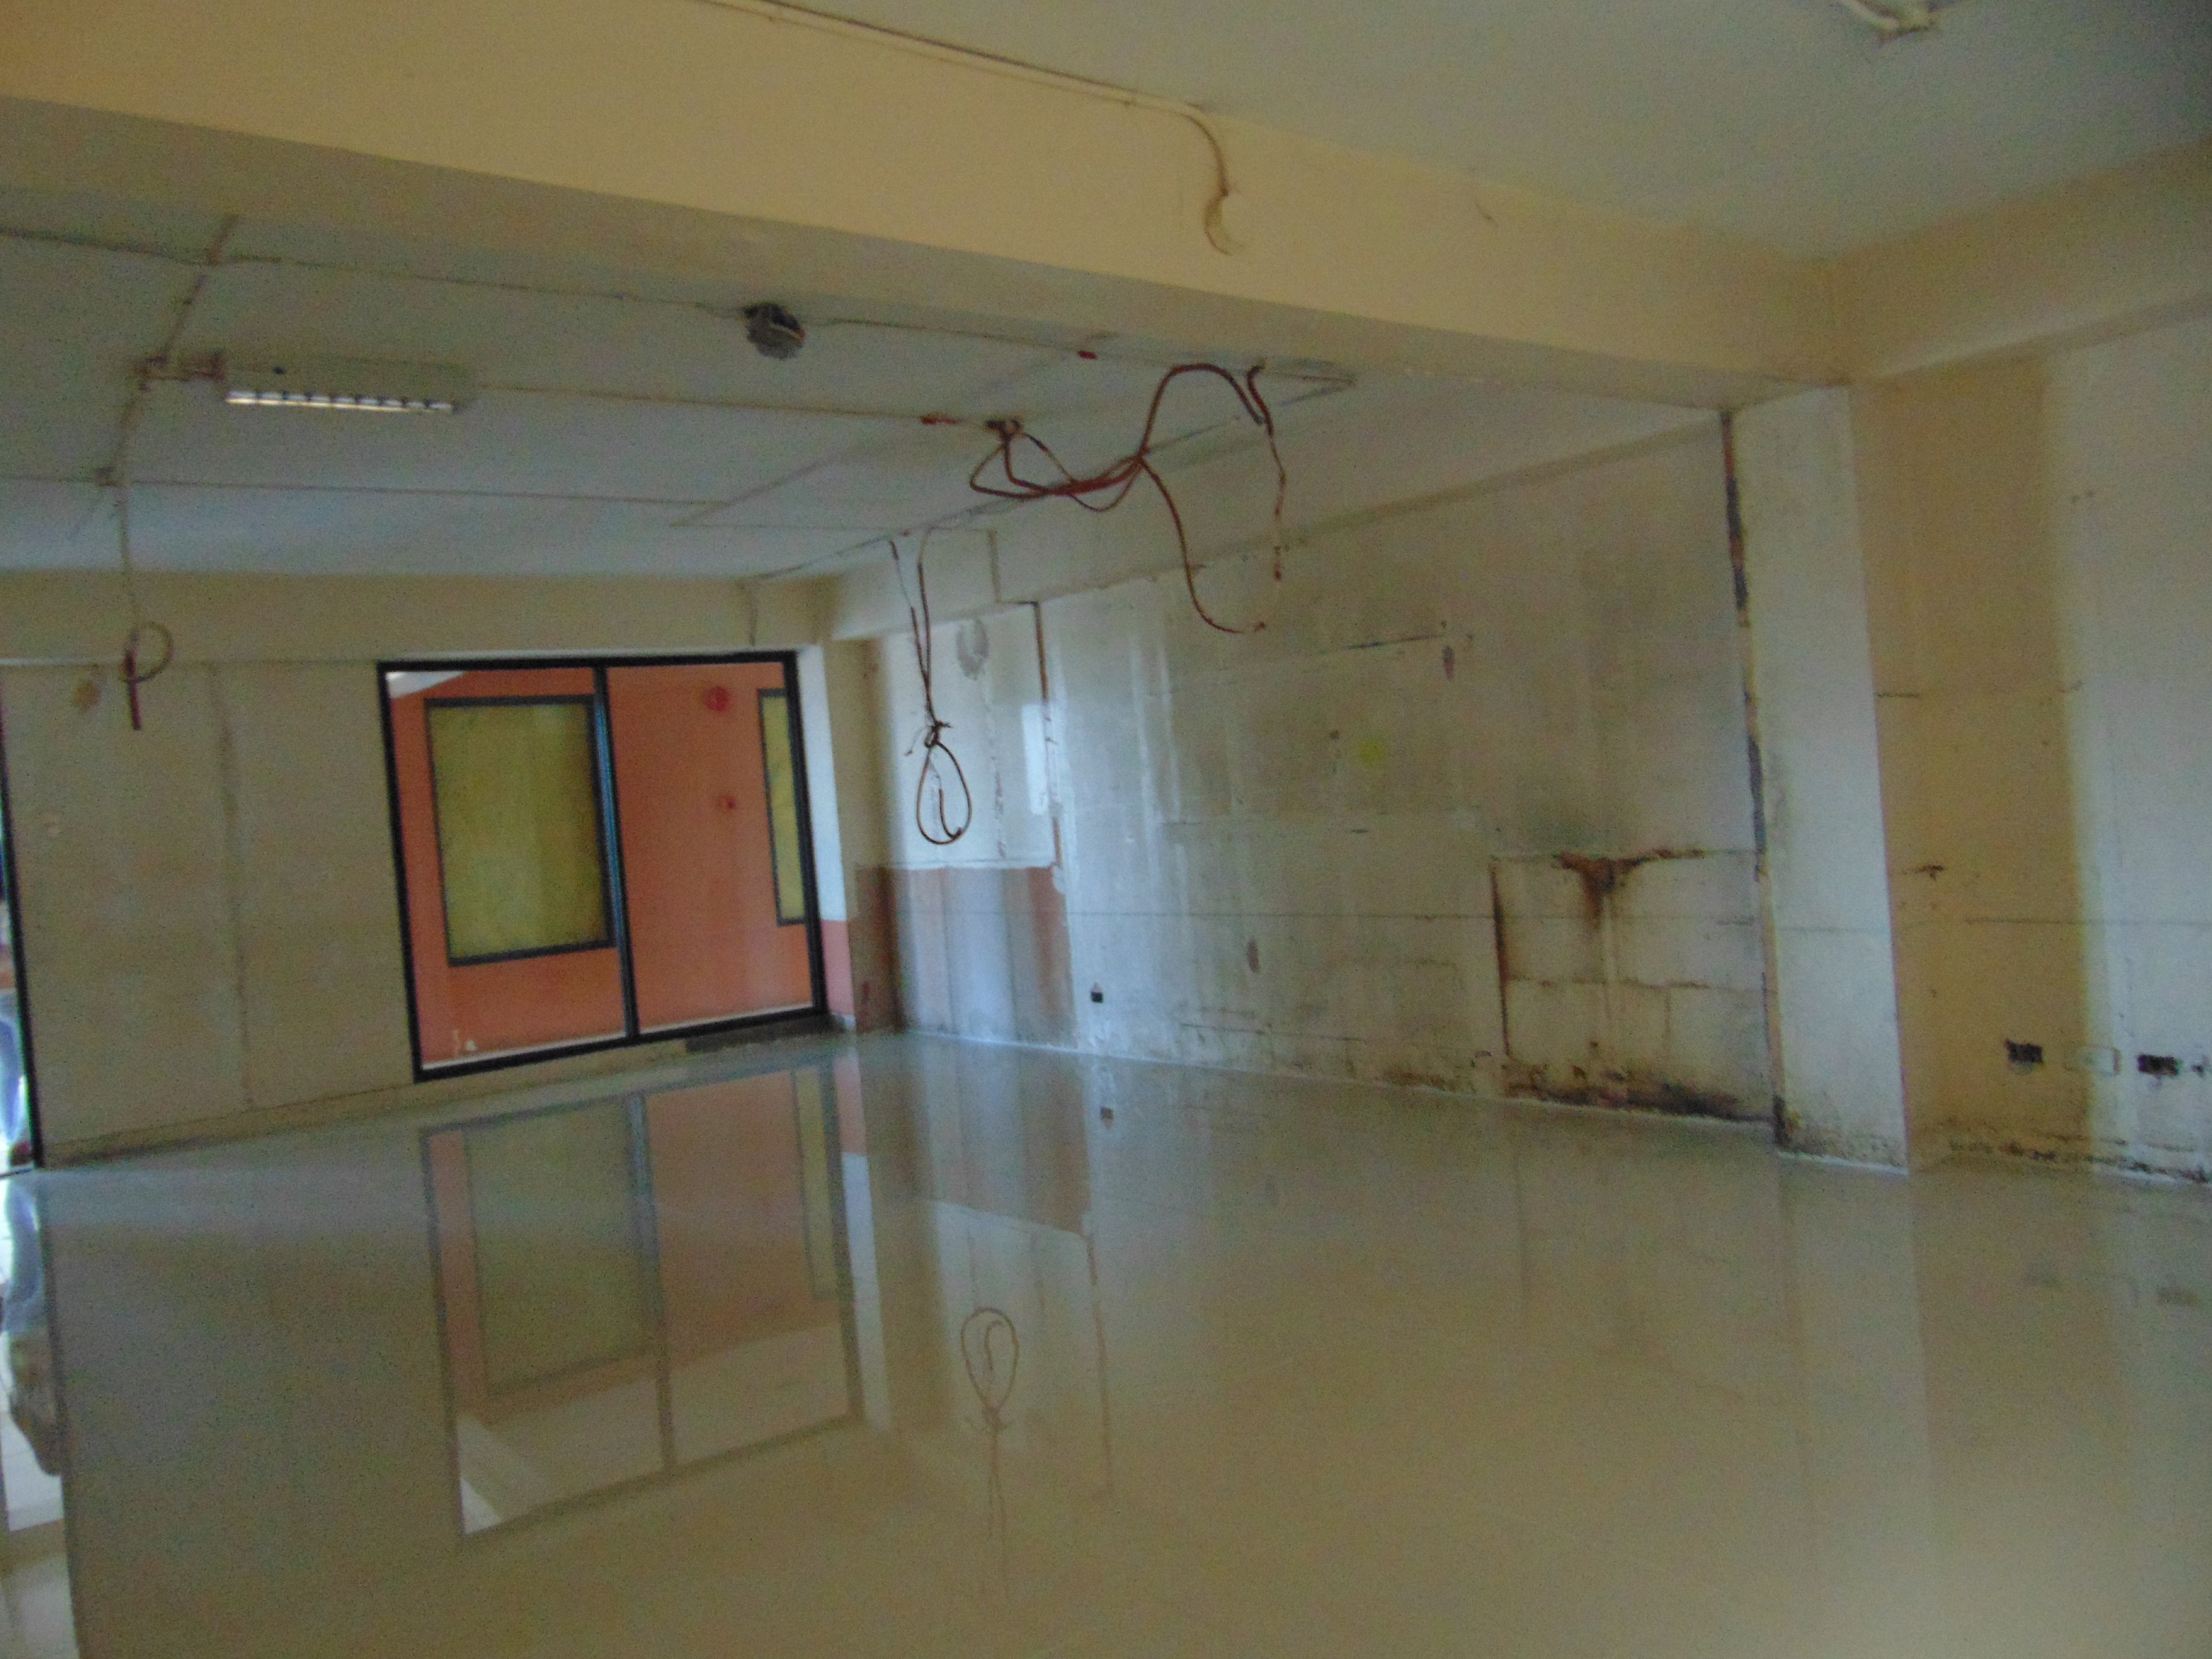 office-space-located-near-usc-talamban-cebu-city